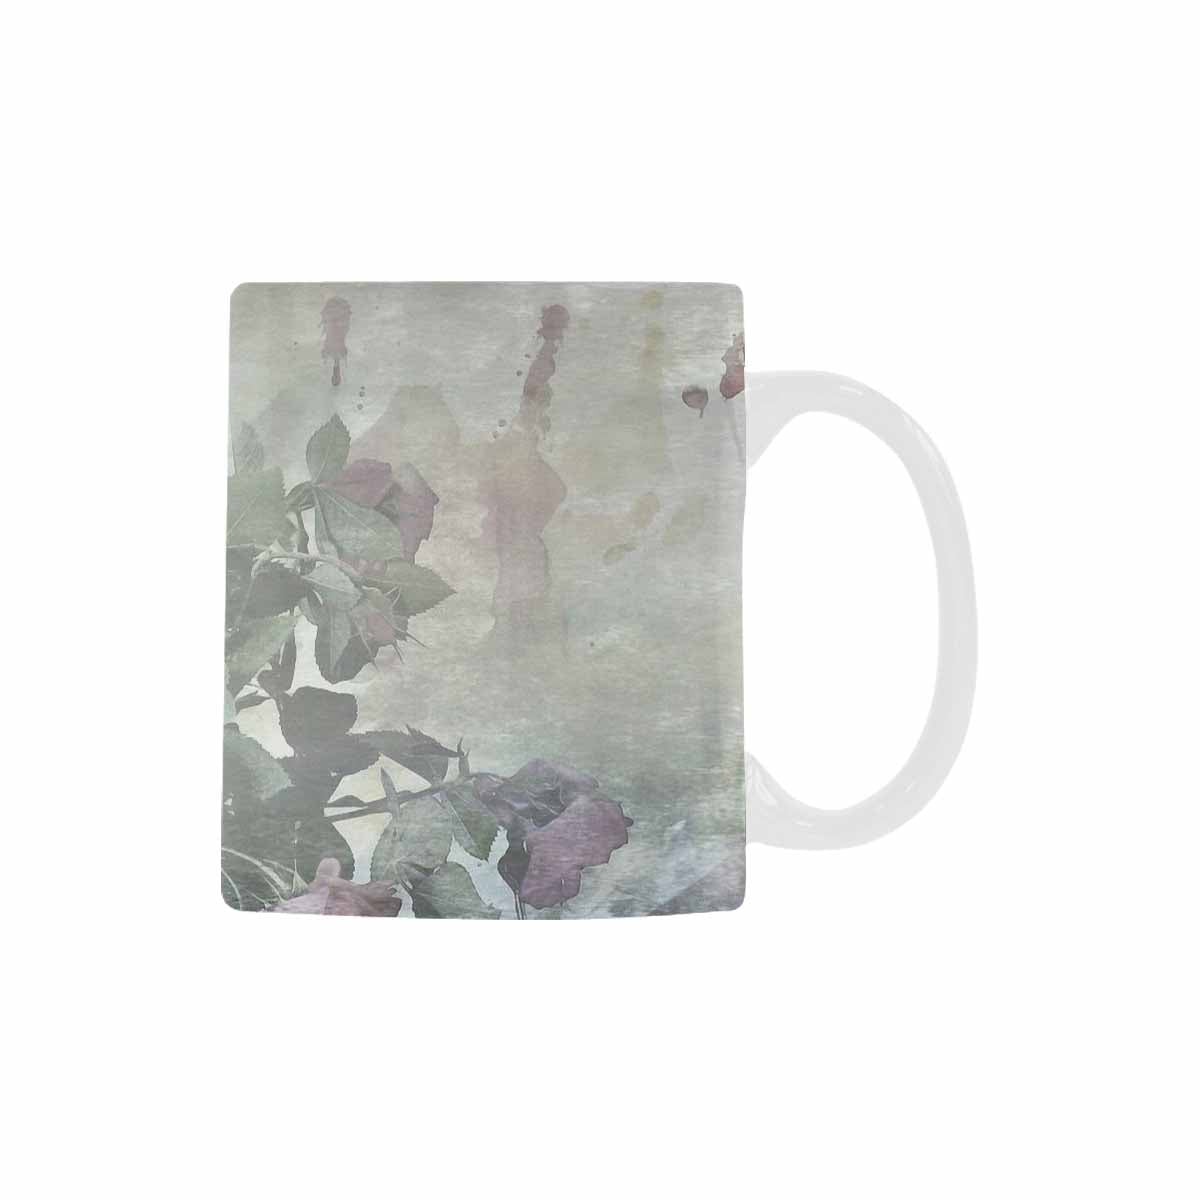 Vintage floral coffee mug or tea cup, Design 23